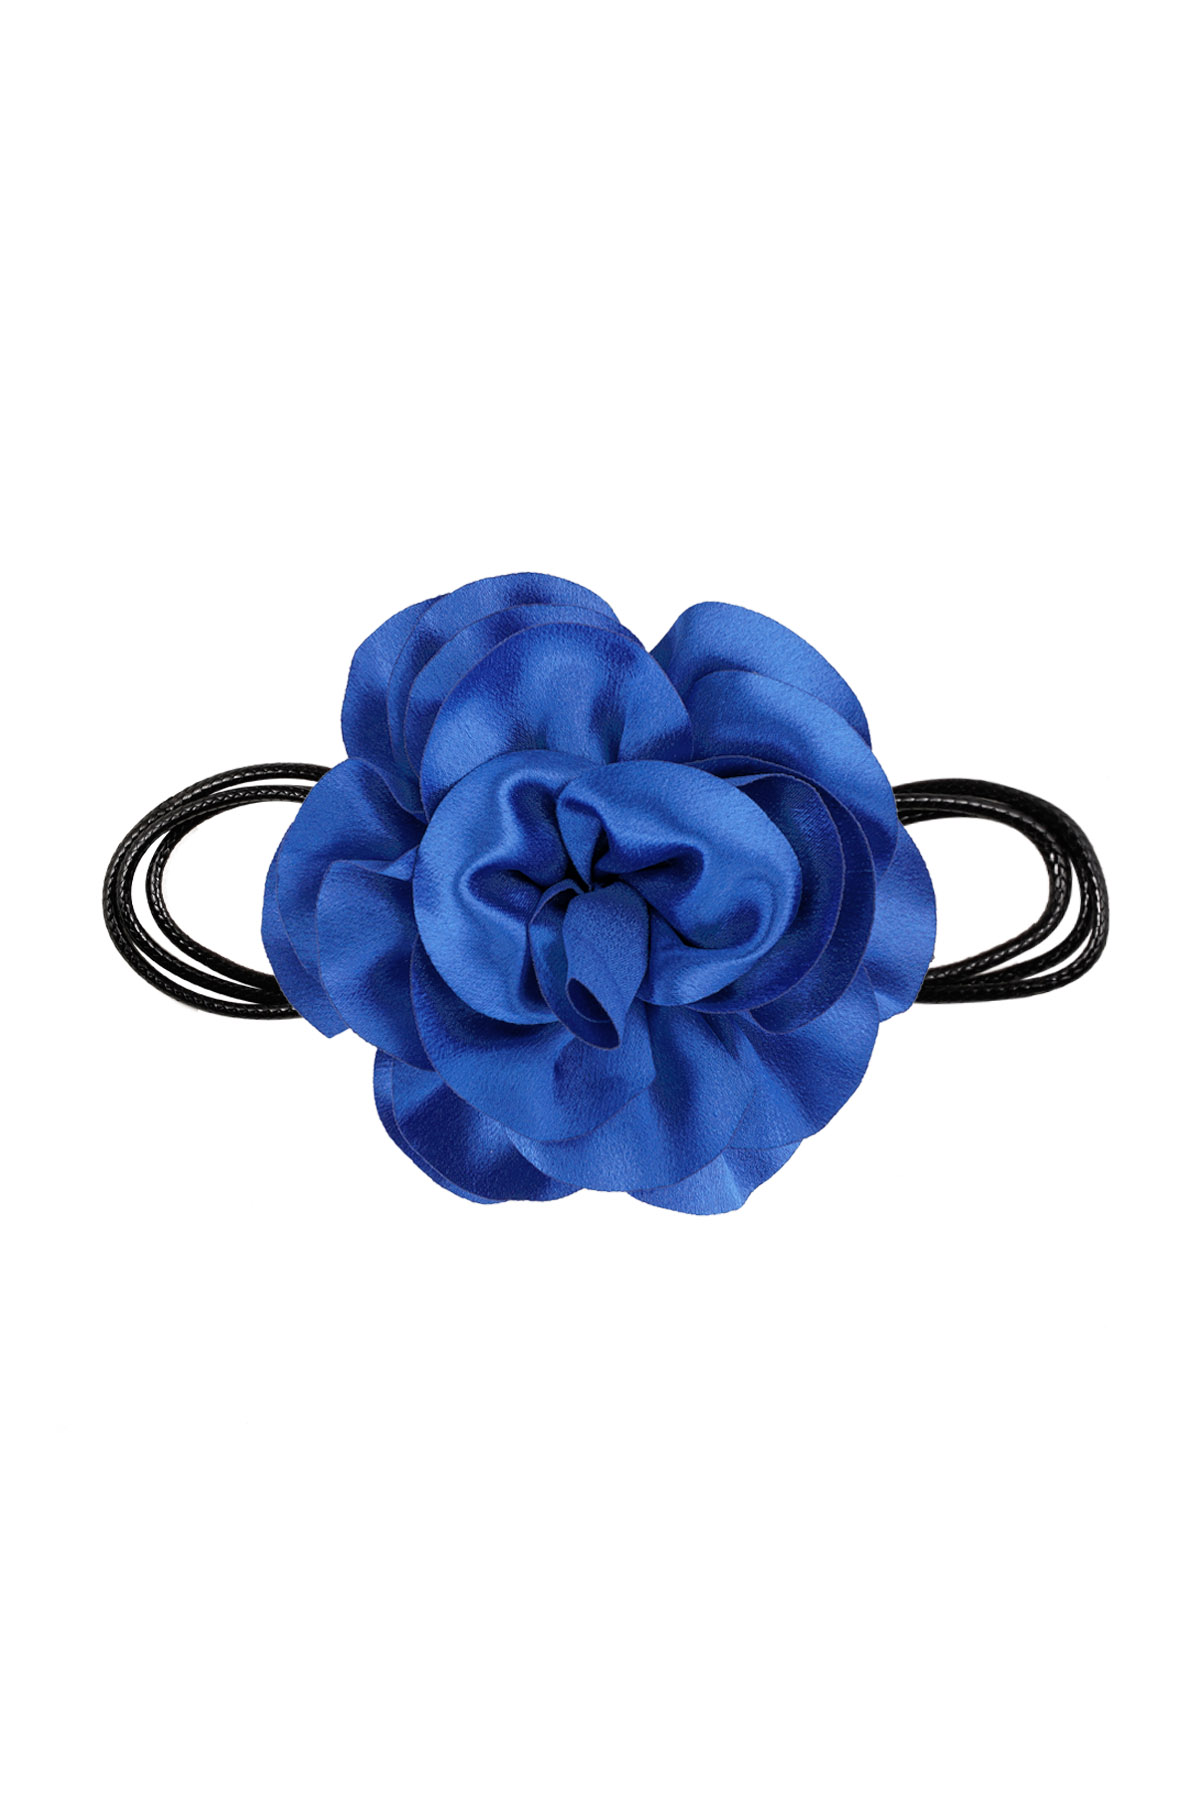 Ketting touw glimmende bloem - felblauw h5 